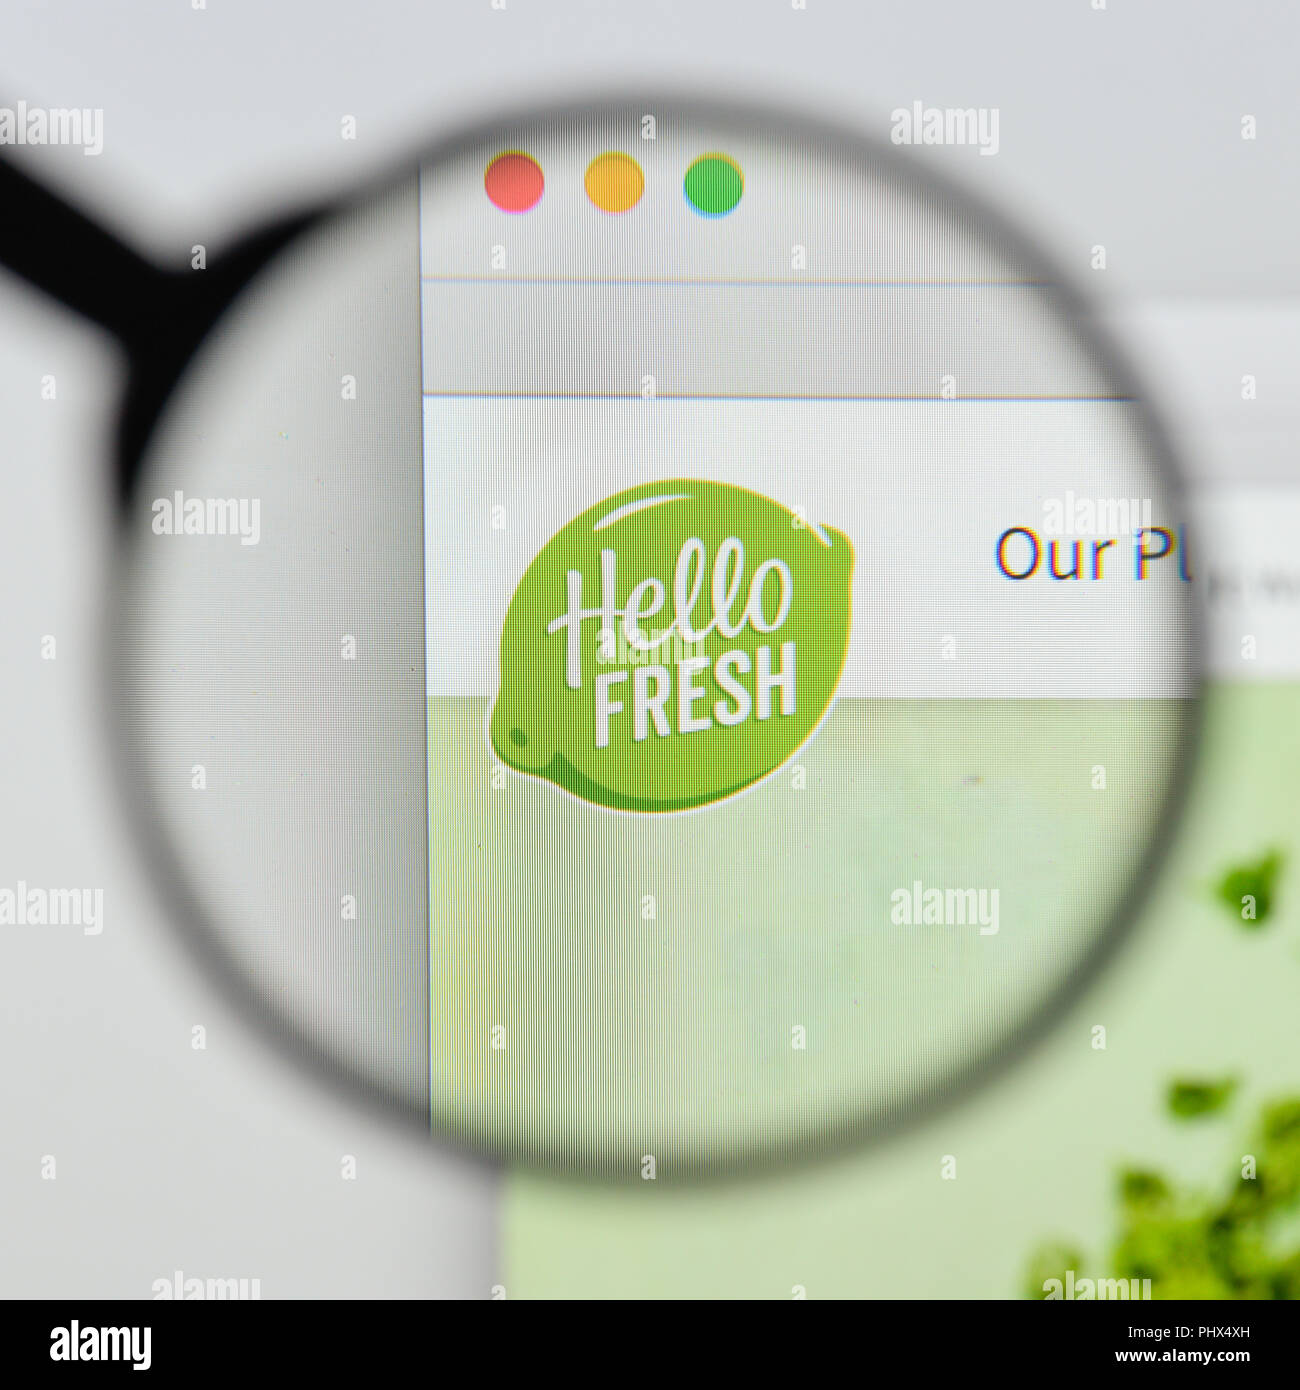 Milan, Italy - August 20, 2018: HelloFresh website homepage. HelloFresh logo visible. Stock Photo